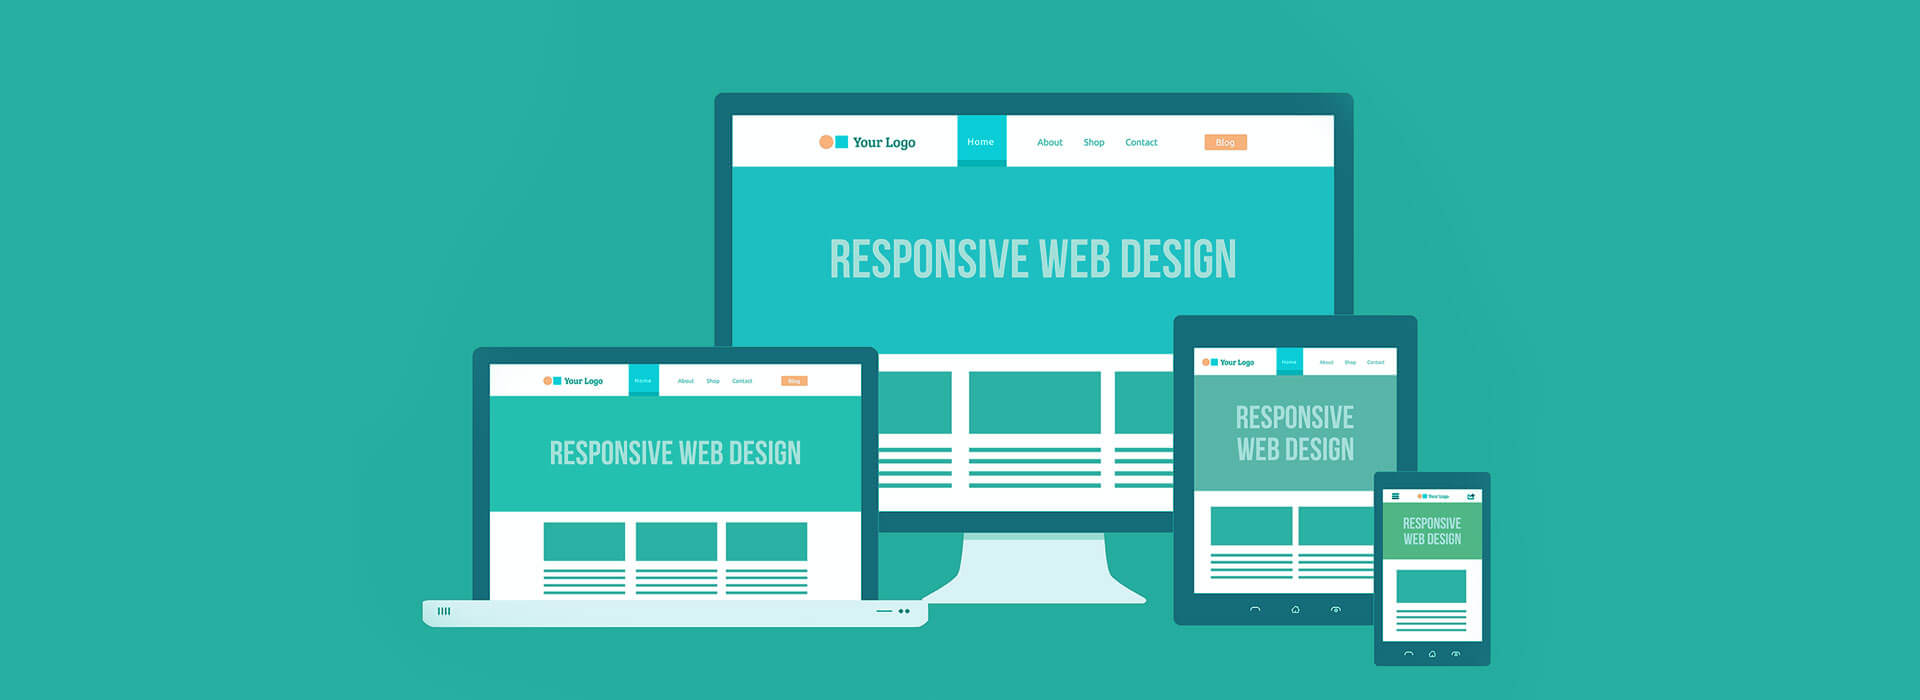 WebRedone - Web design and development agency - Responsive web design hero image